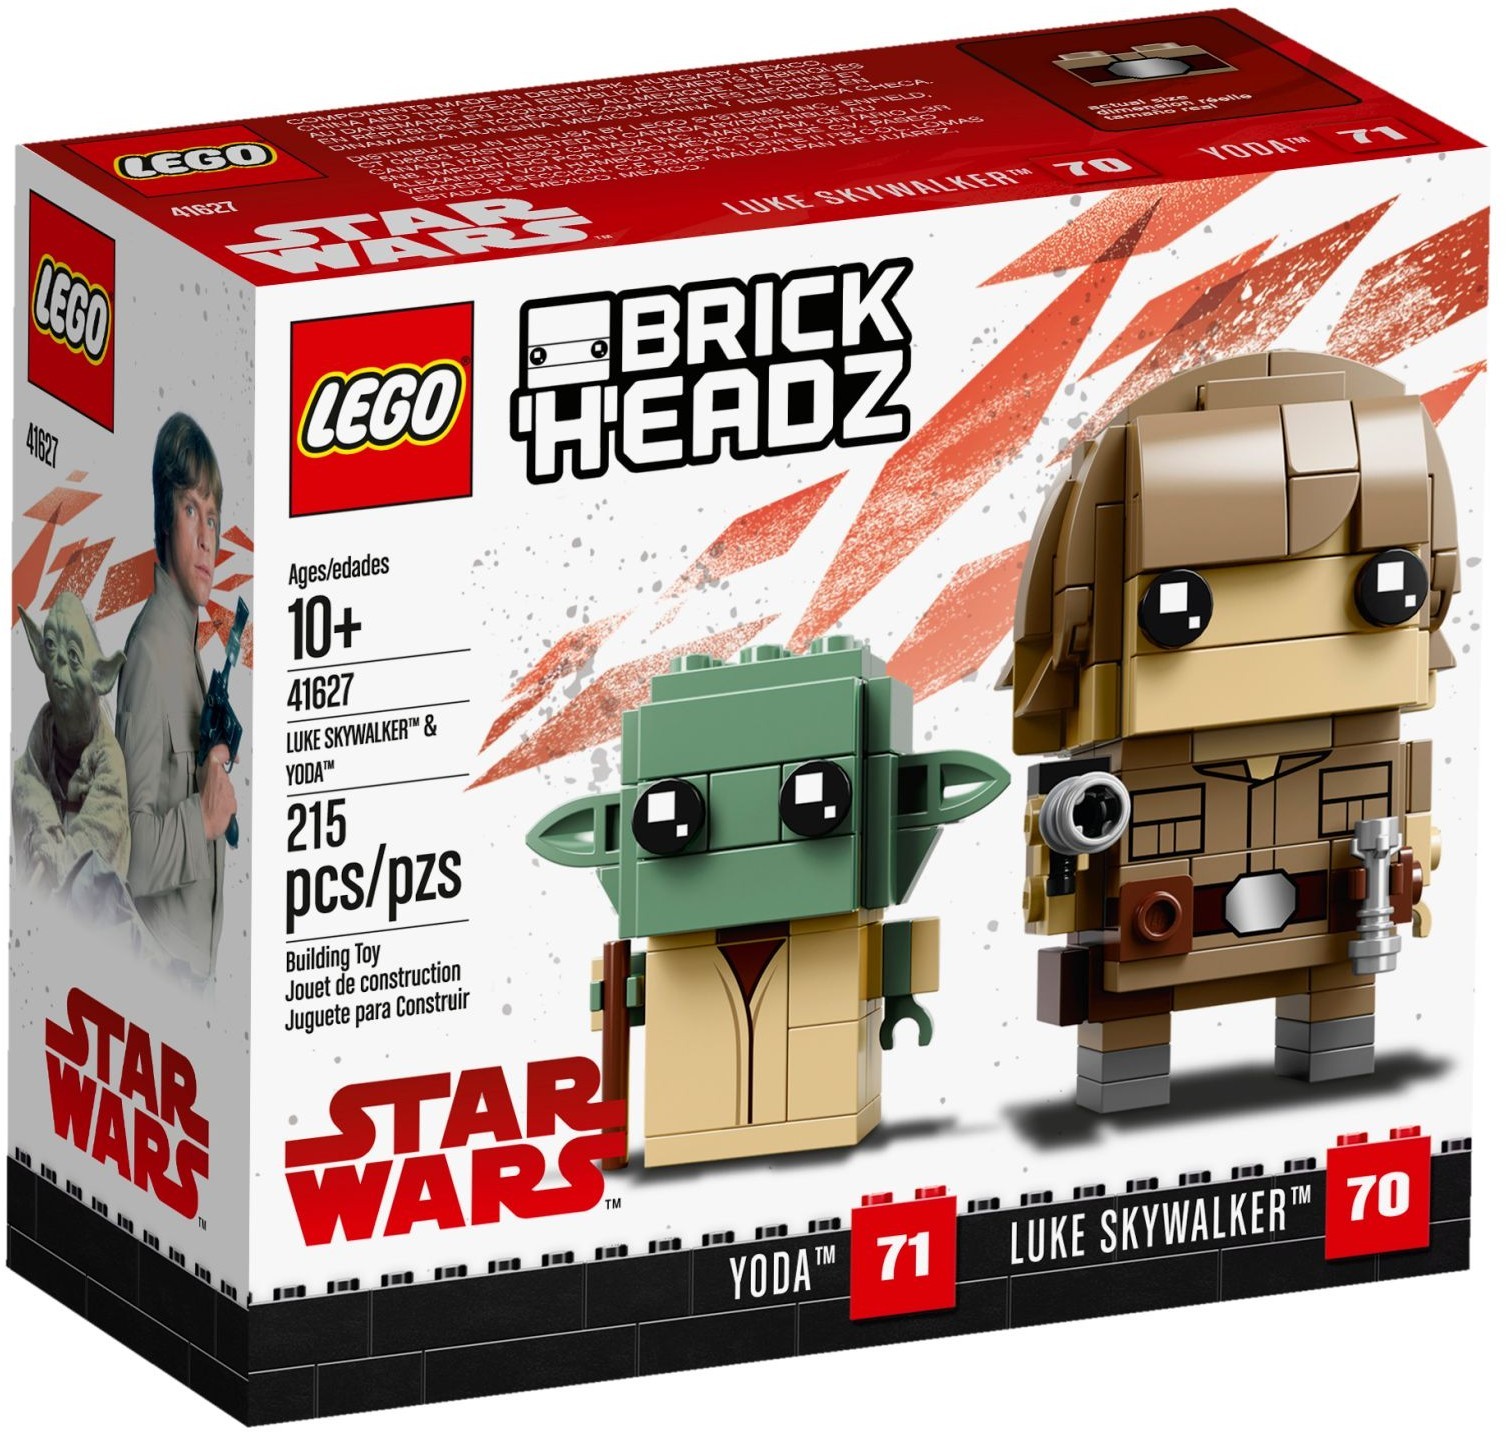 Lego 41627 Luke Skywalker & Yoda - Set Lego Brickheadz pas cher